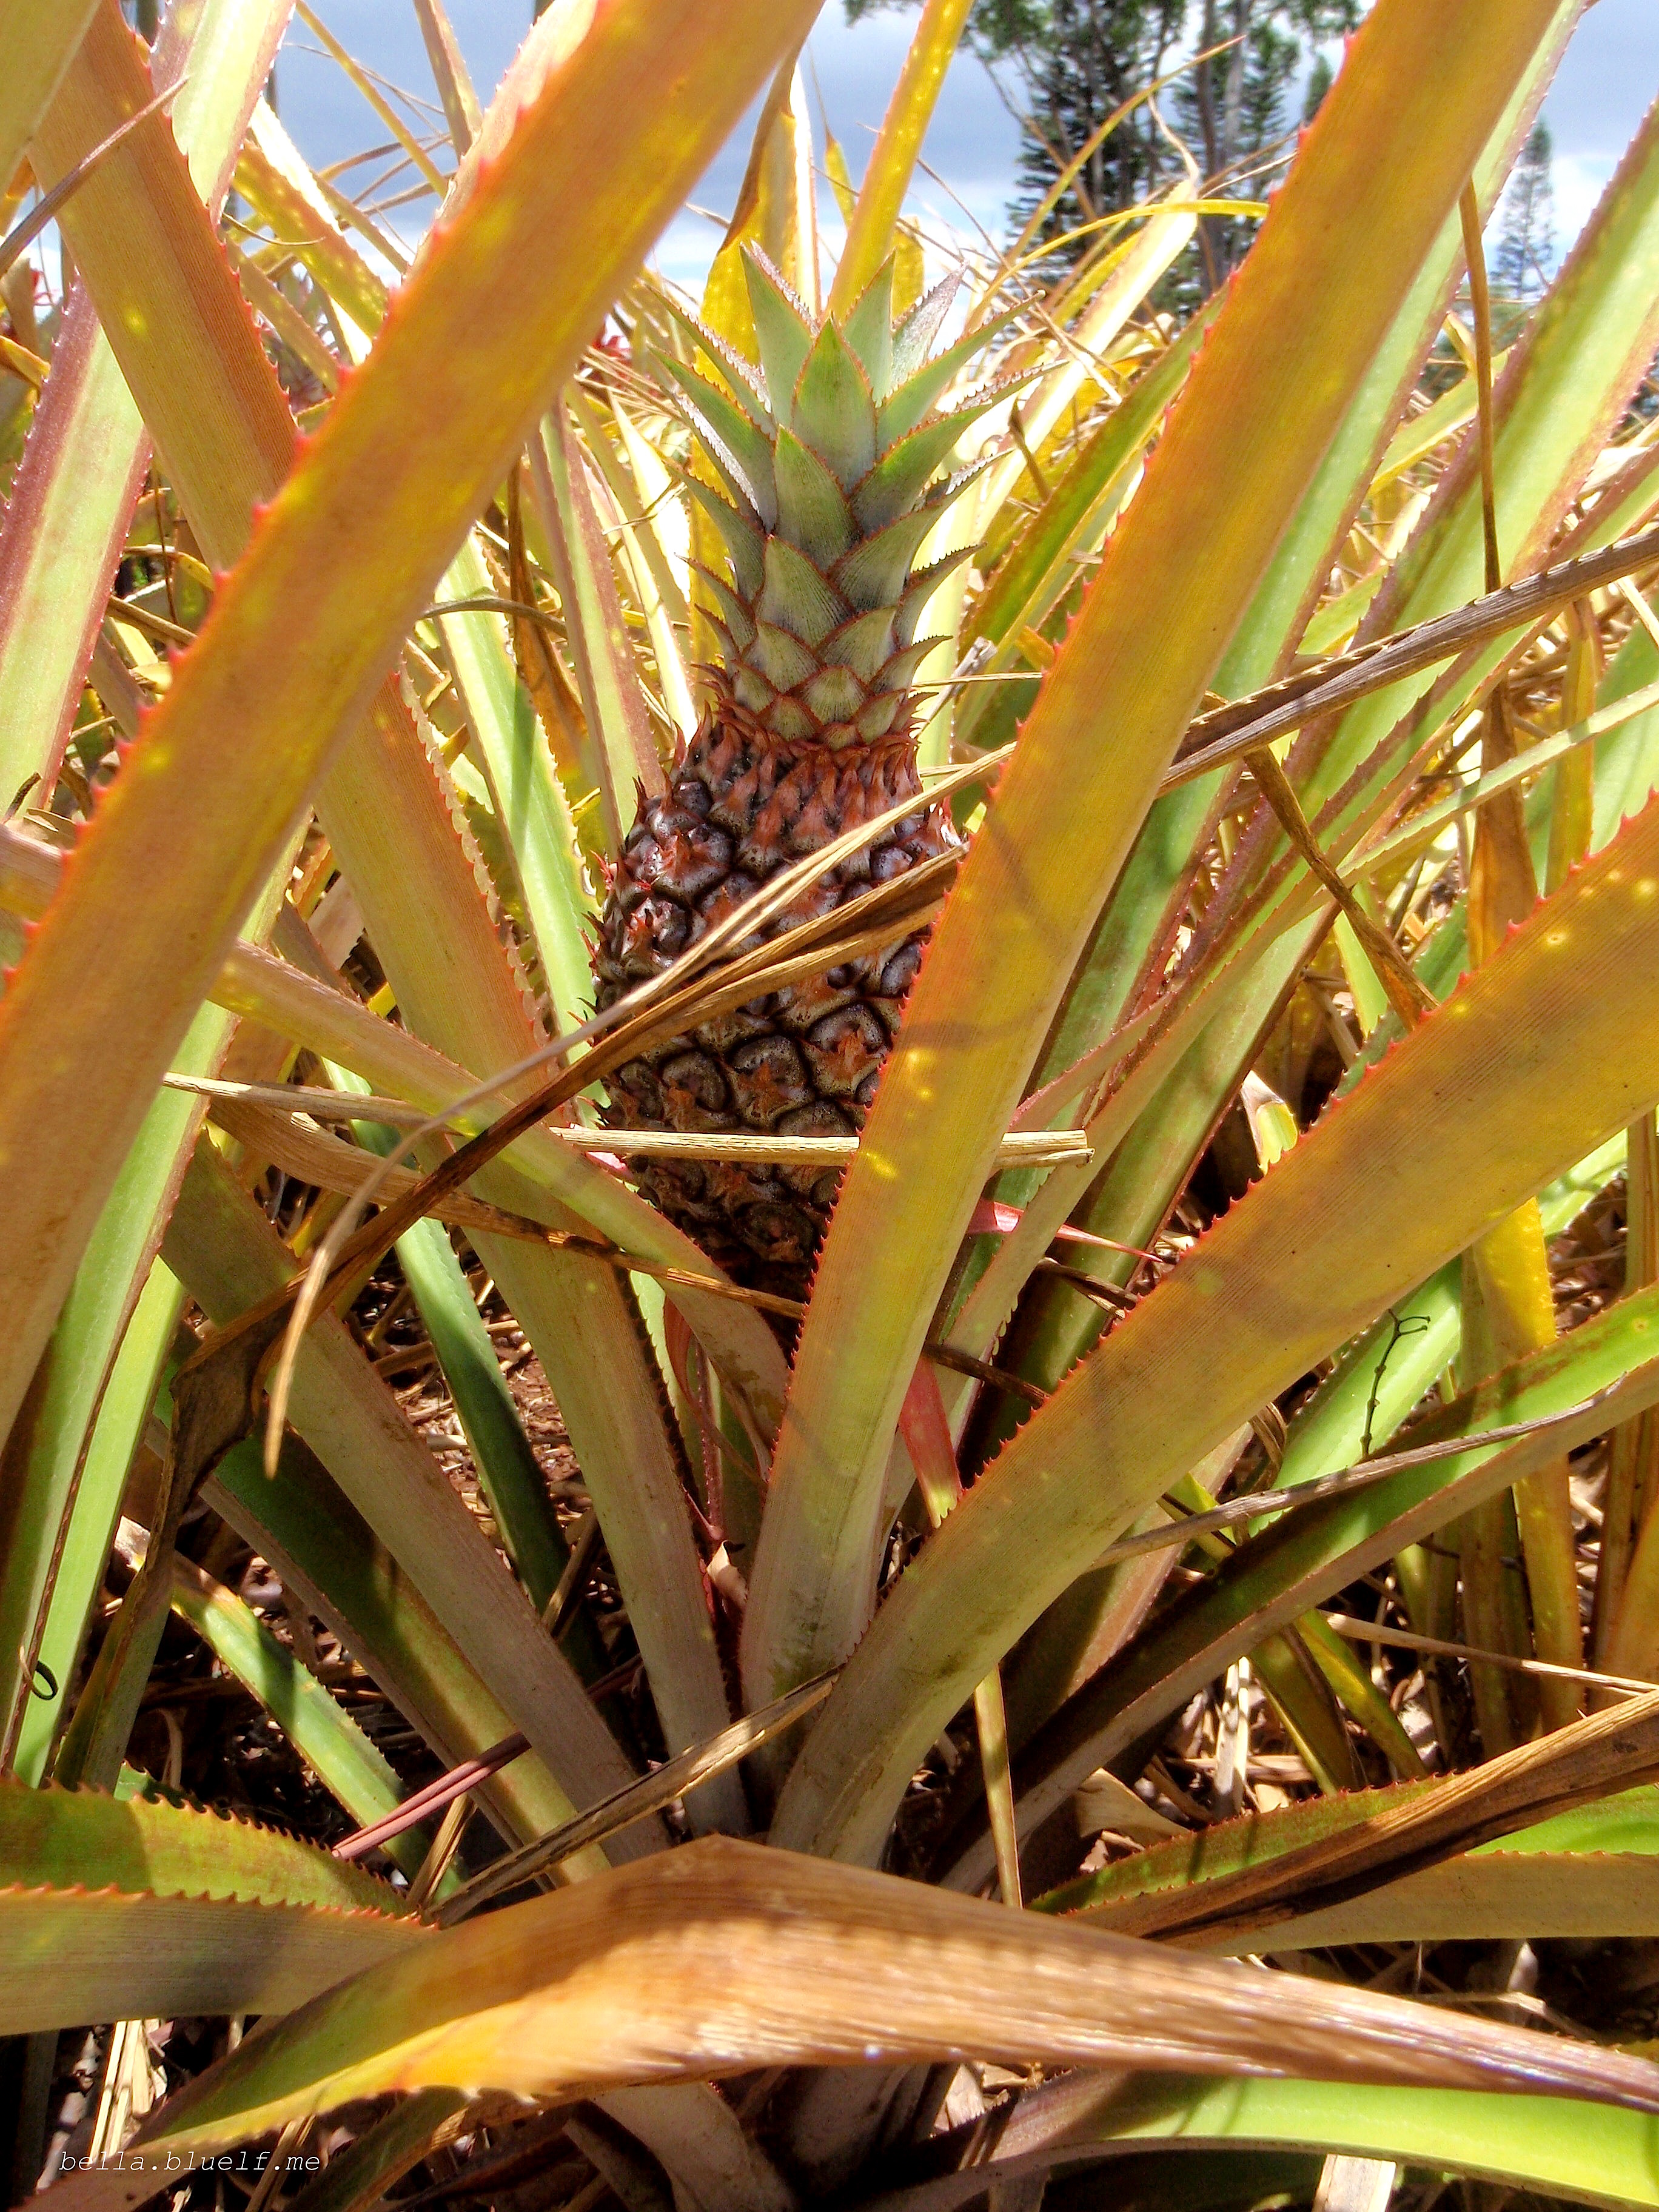 Pineapple - 2014 photo 7 by Rhônya Holman for bella.bluelf.me